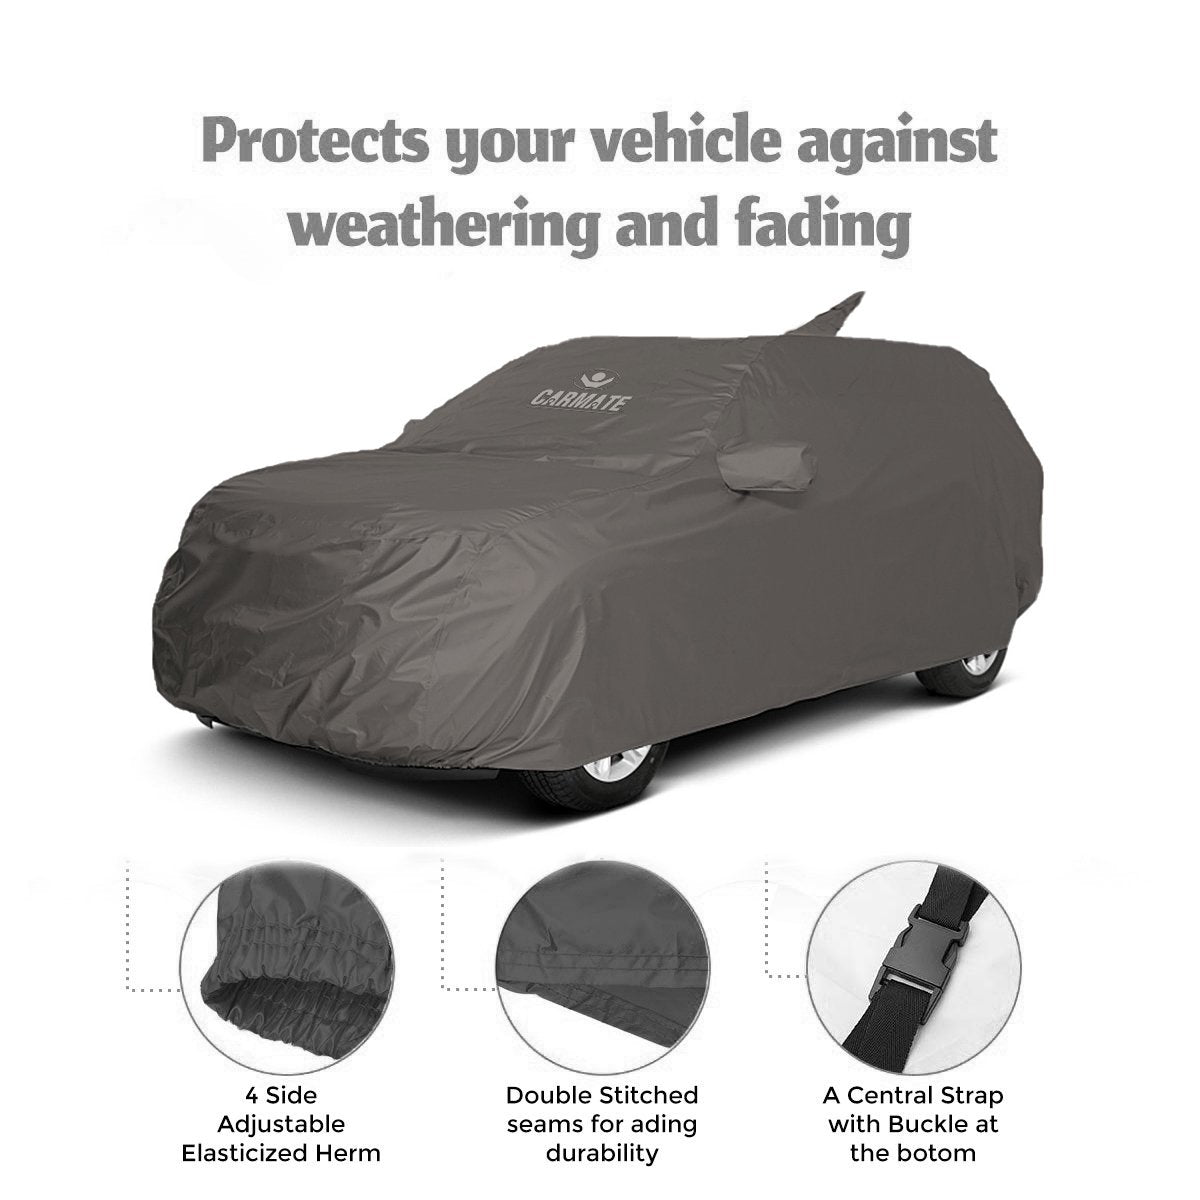 Carmate Car Body Cover 100% Waterproof Pride (Grey) for Fiat - Linea - CARMATE®